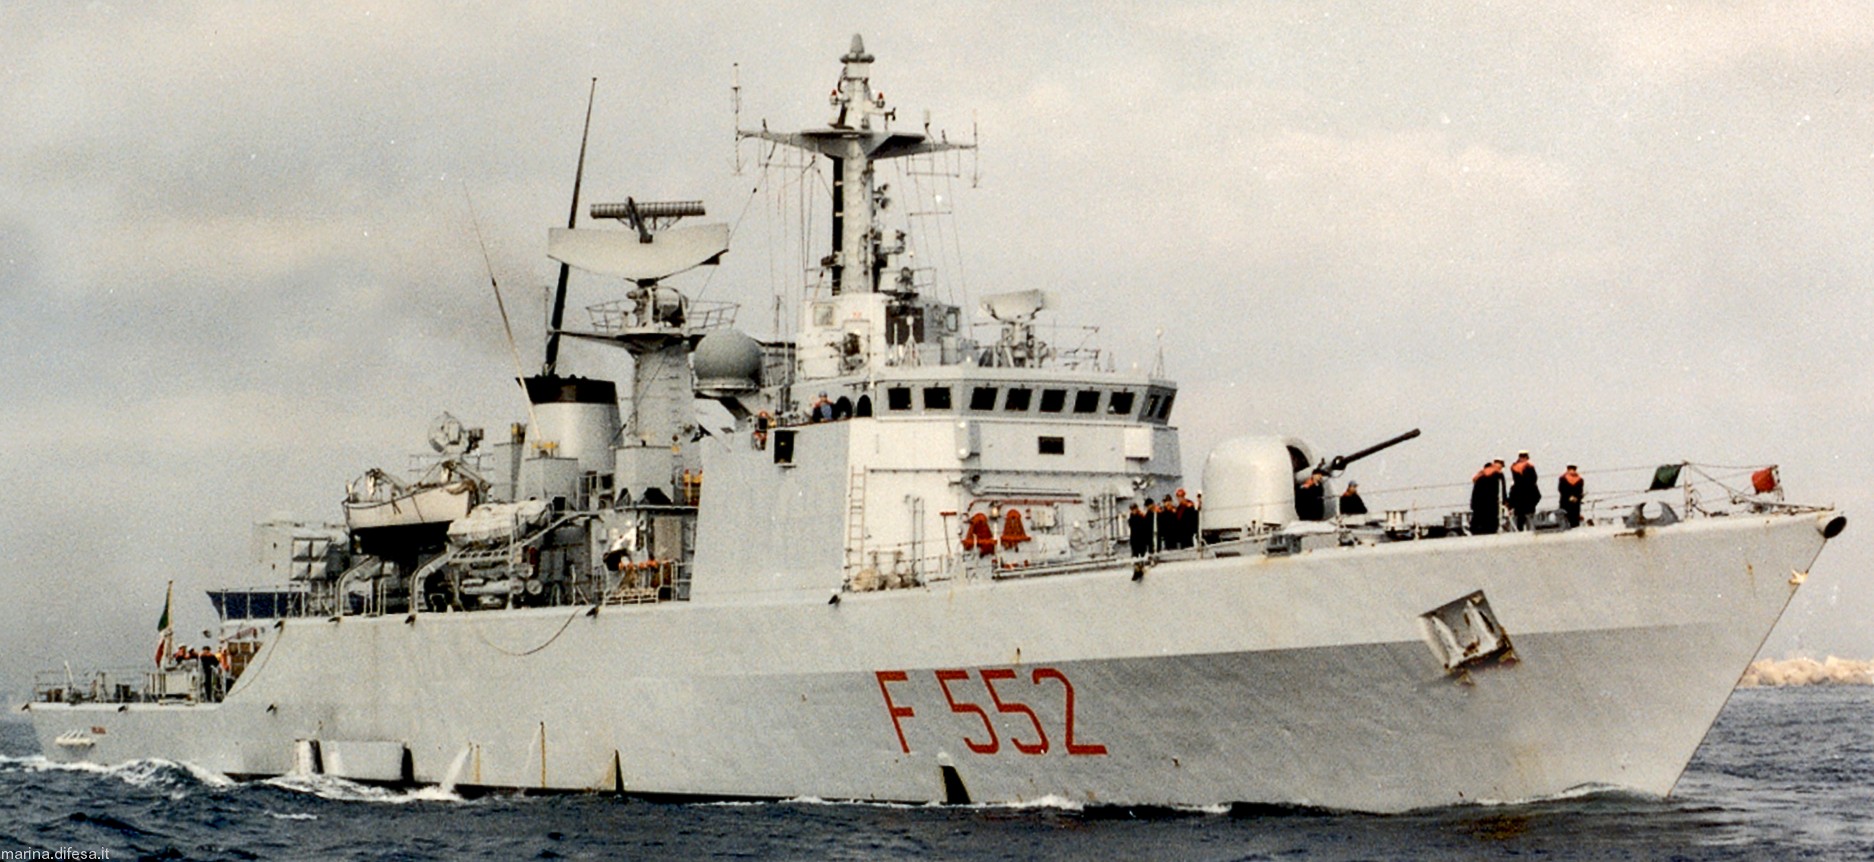 f-552 urania nave its minerva class corvette italian navy marina militare 02x fincantieri riva trigoso